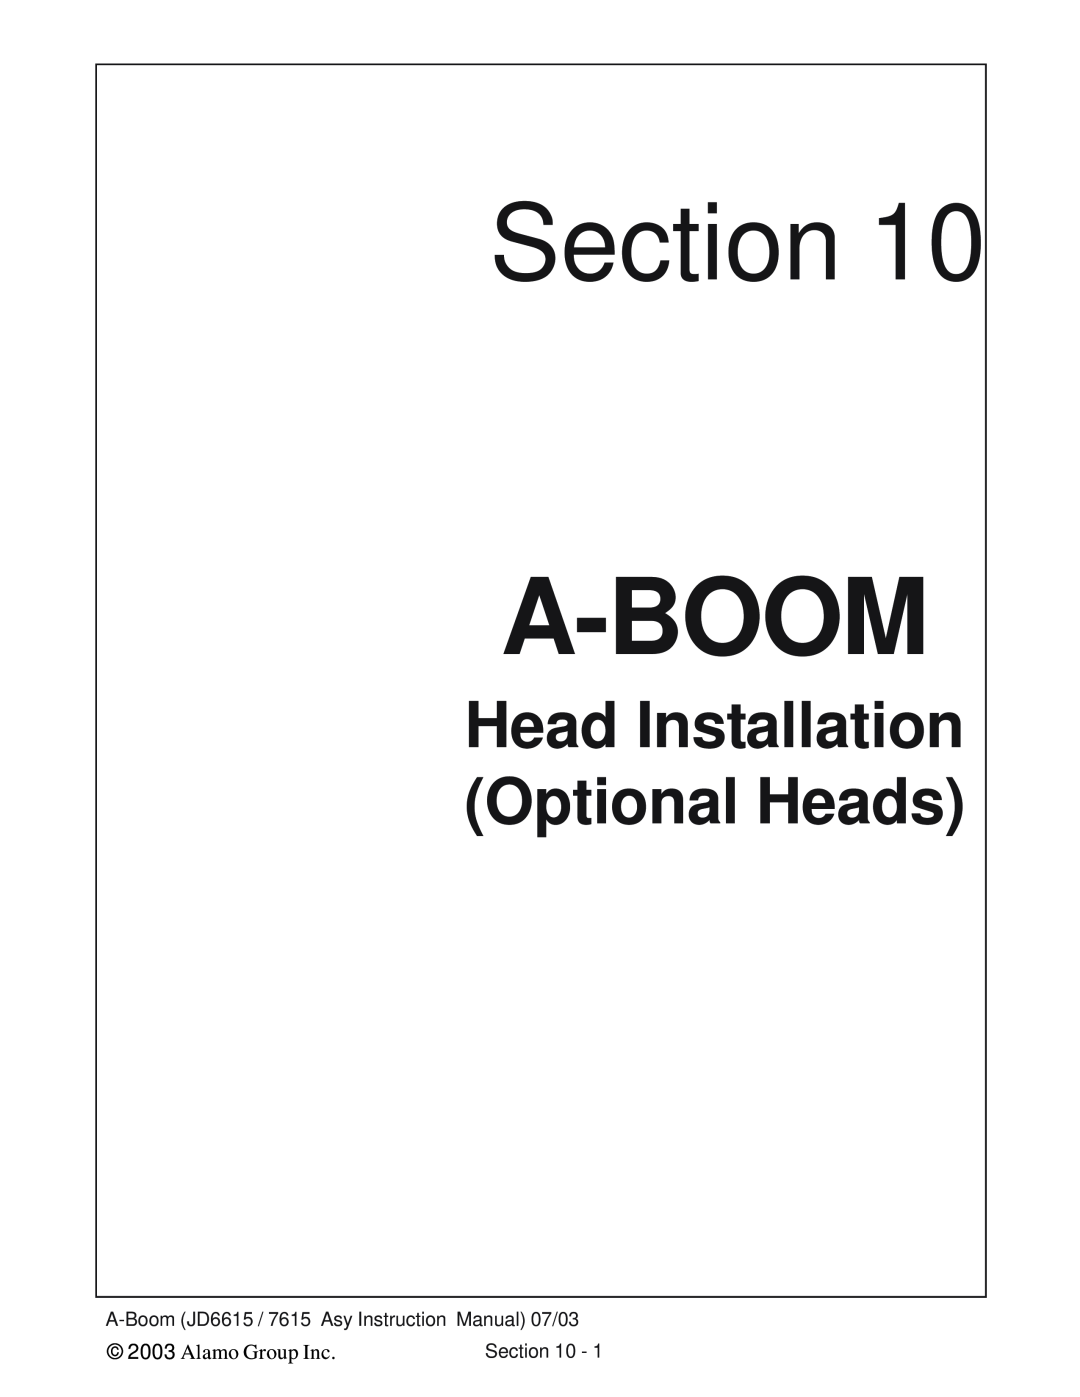 Alamo DSEB-D16/SAS instruction manual Head Installation Optional Heads, Section, A-Boom, Alamo Group Inc 